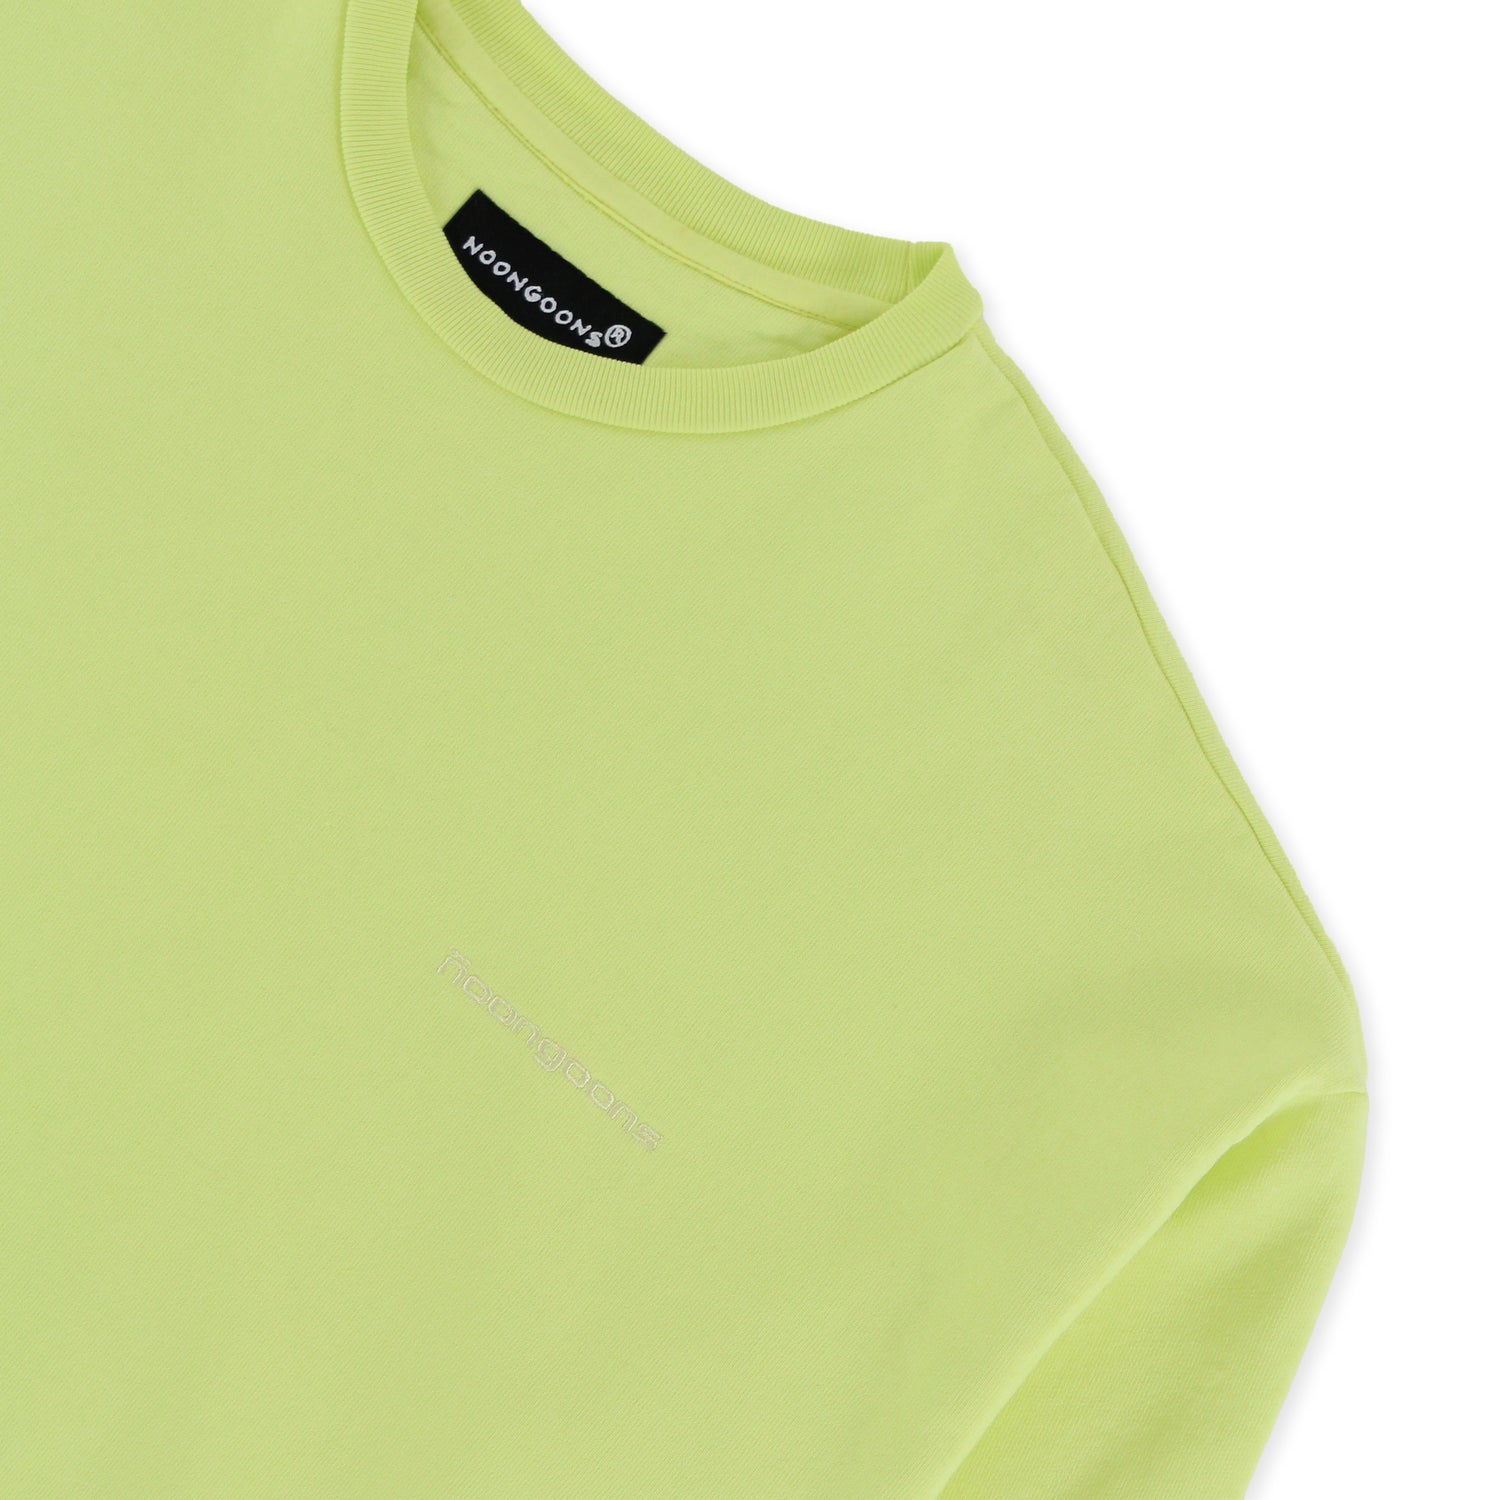 Icon Sweatshirt - Pale Yellow